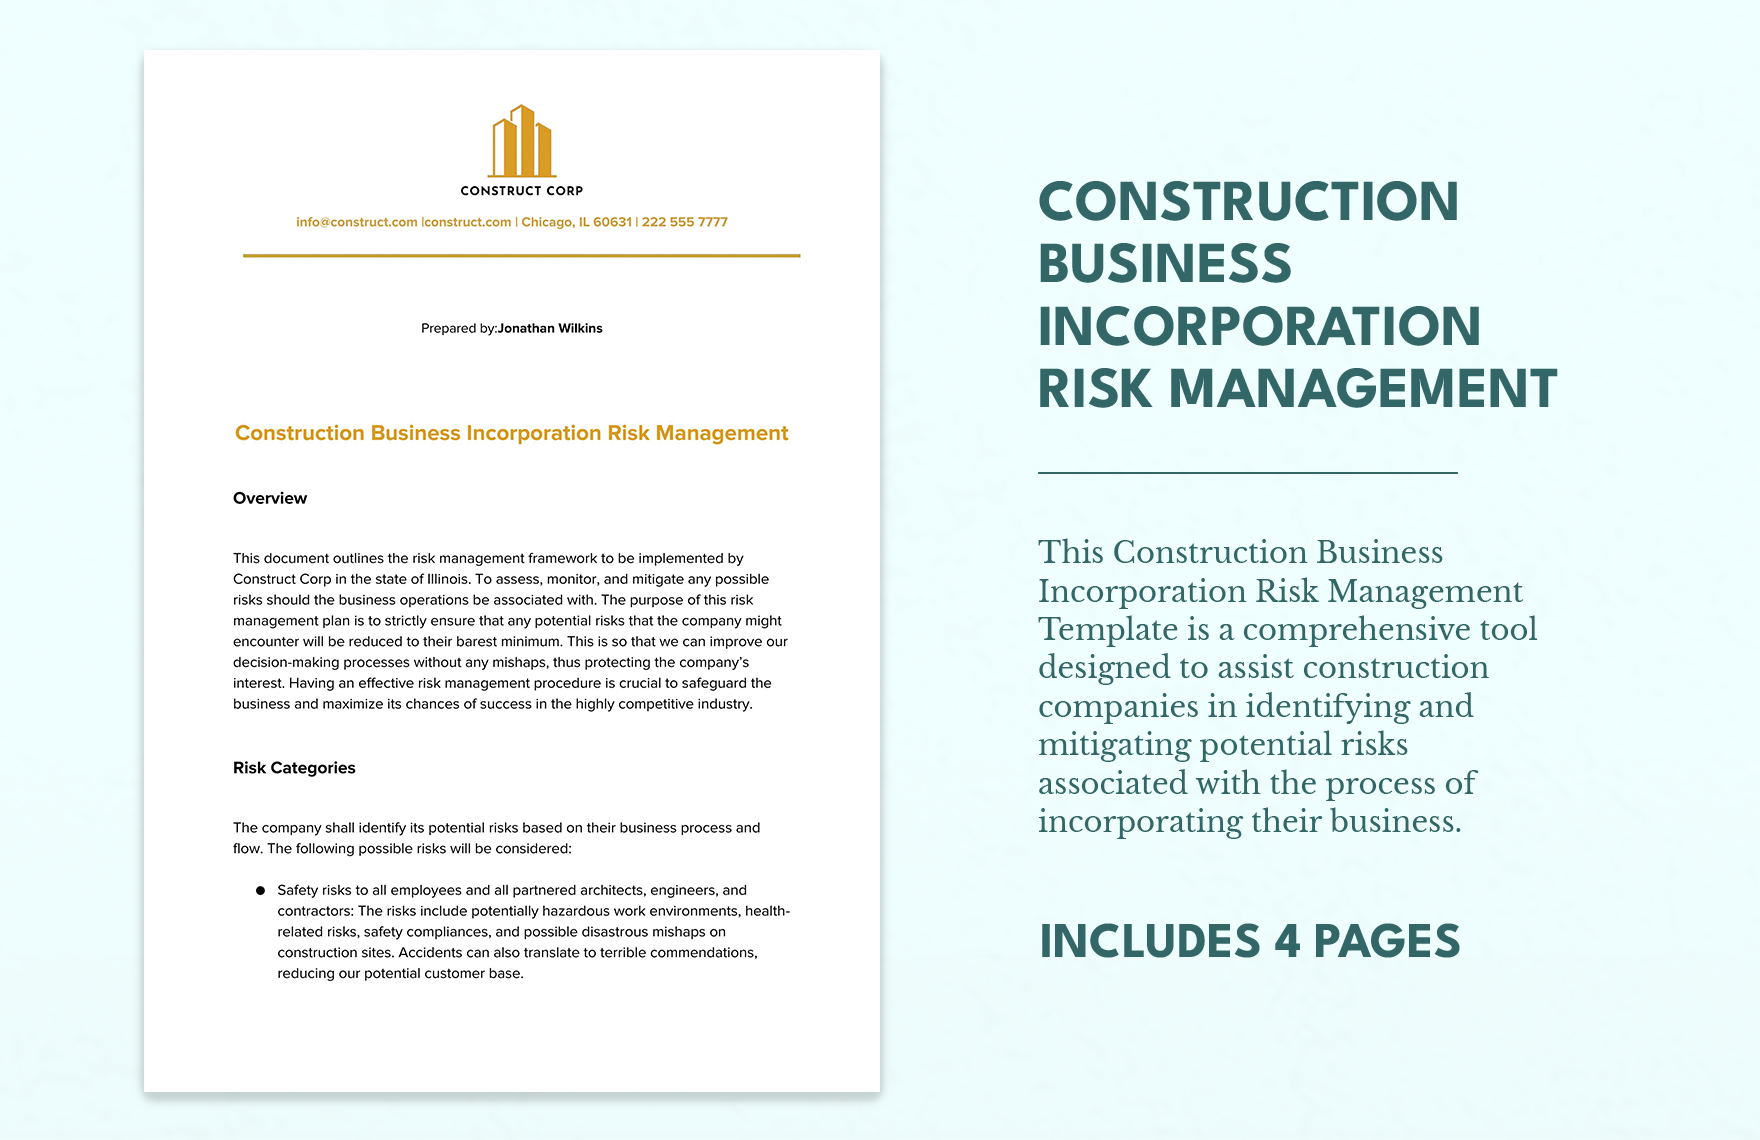 Construction Business Incorporation Risk Management 